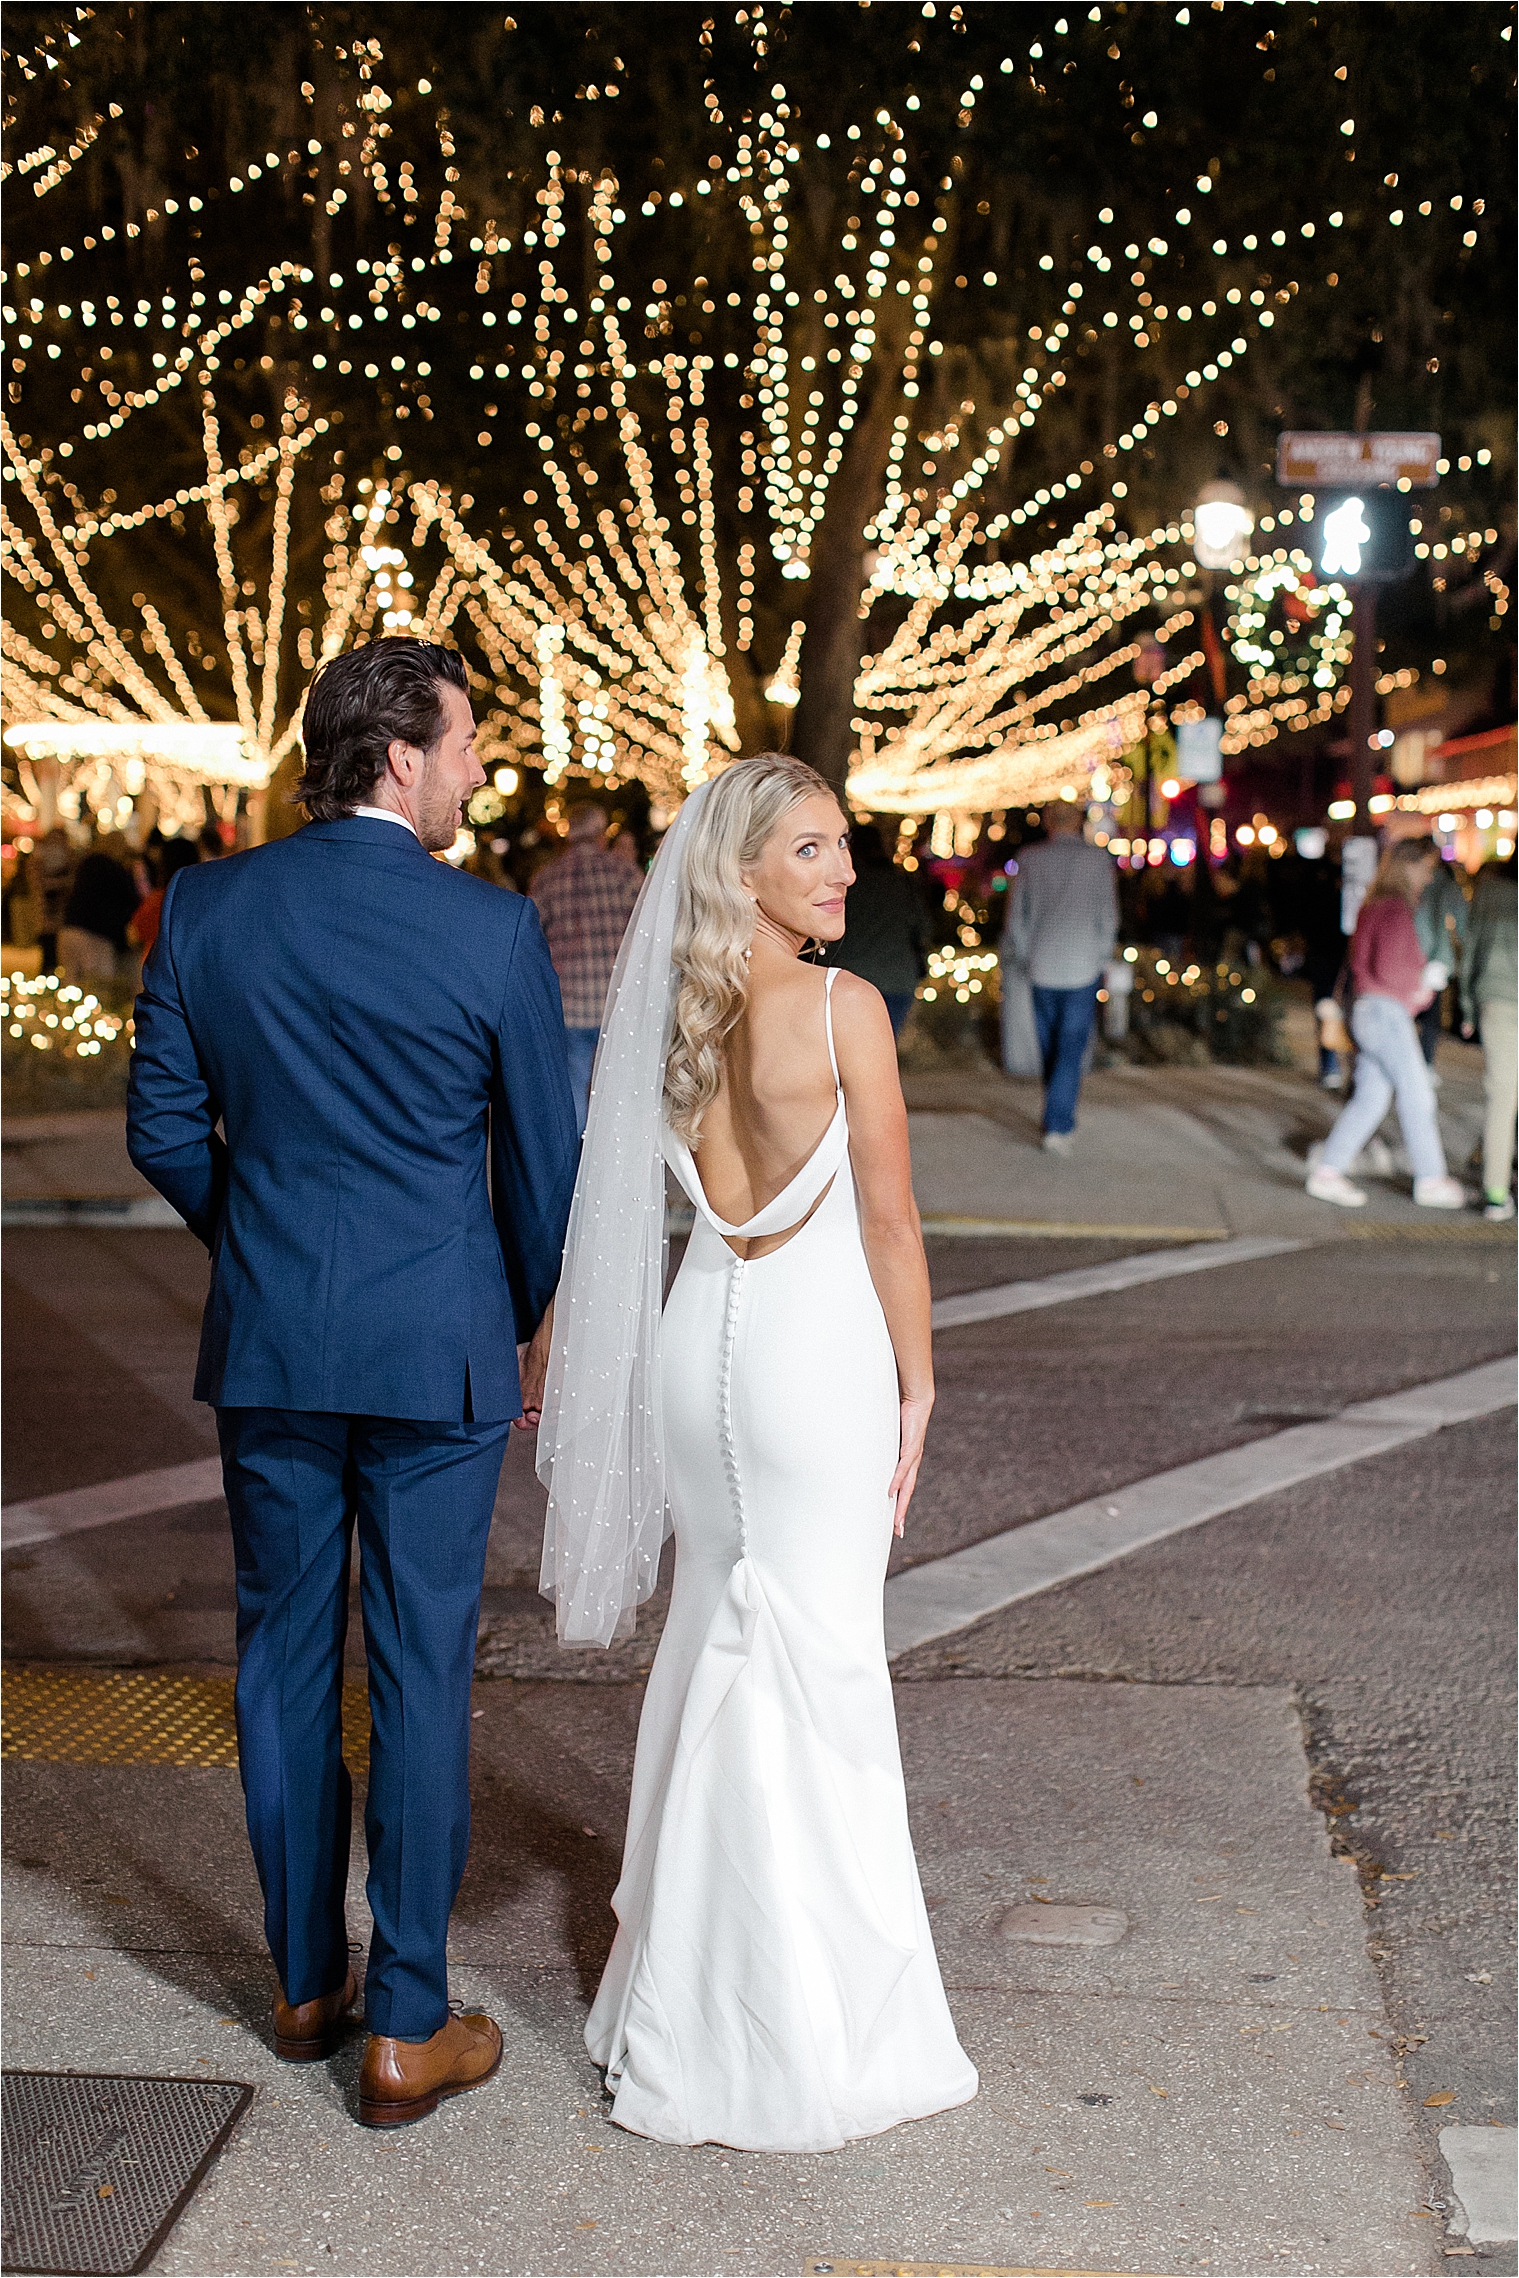 Couple walking during nights of lights, Lightner Museum Wedding St Augustine Florida